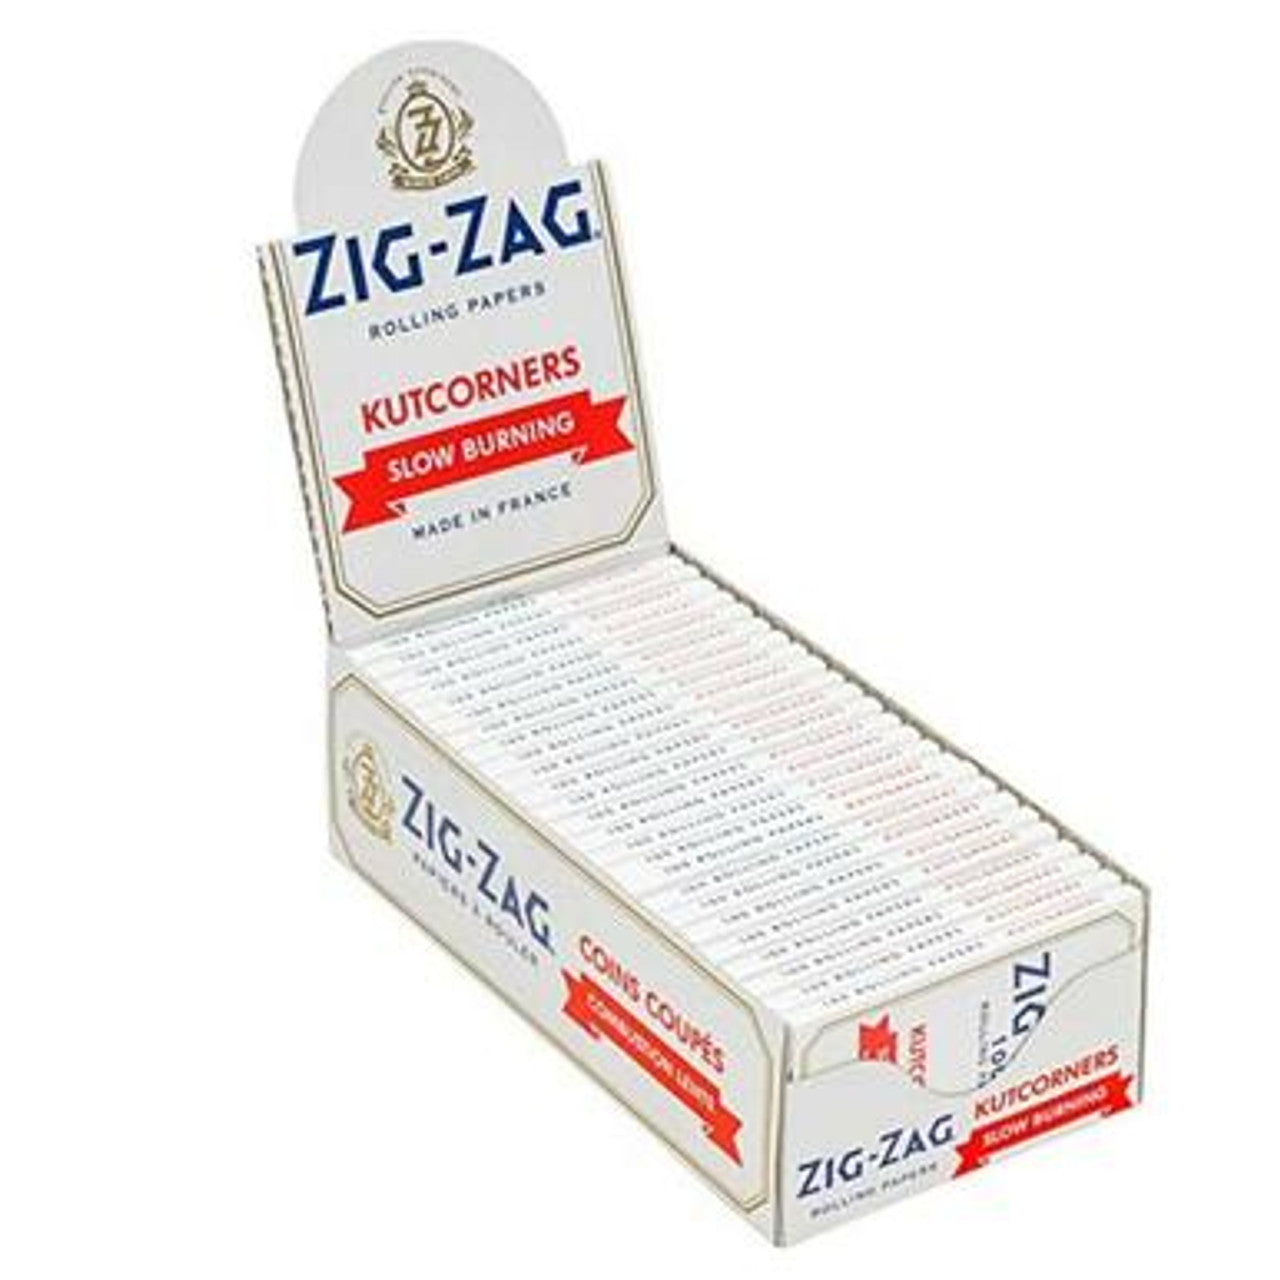 Zig Zag Kutcorners Slow Burning Rolling Papers - SINGLE WIDE - WHITE - 25ct